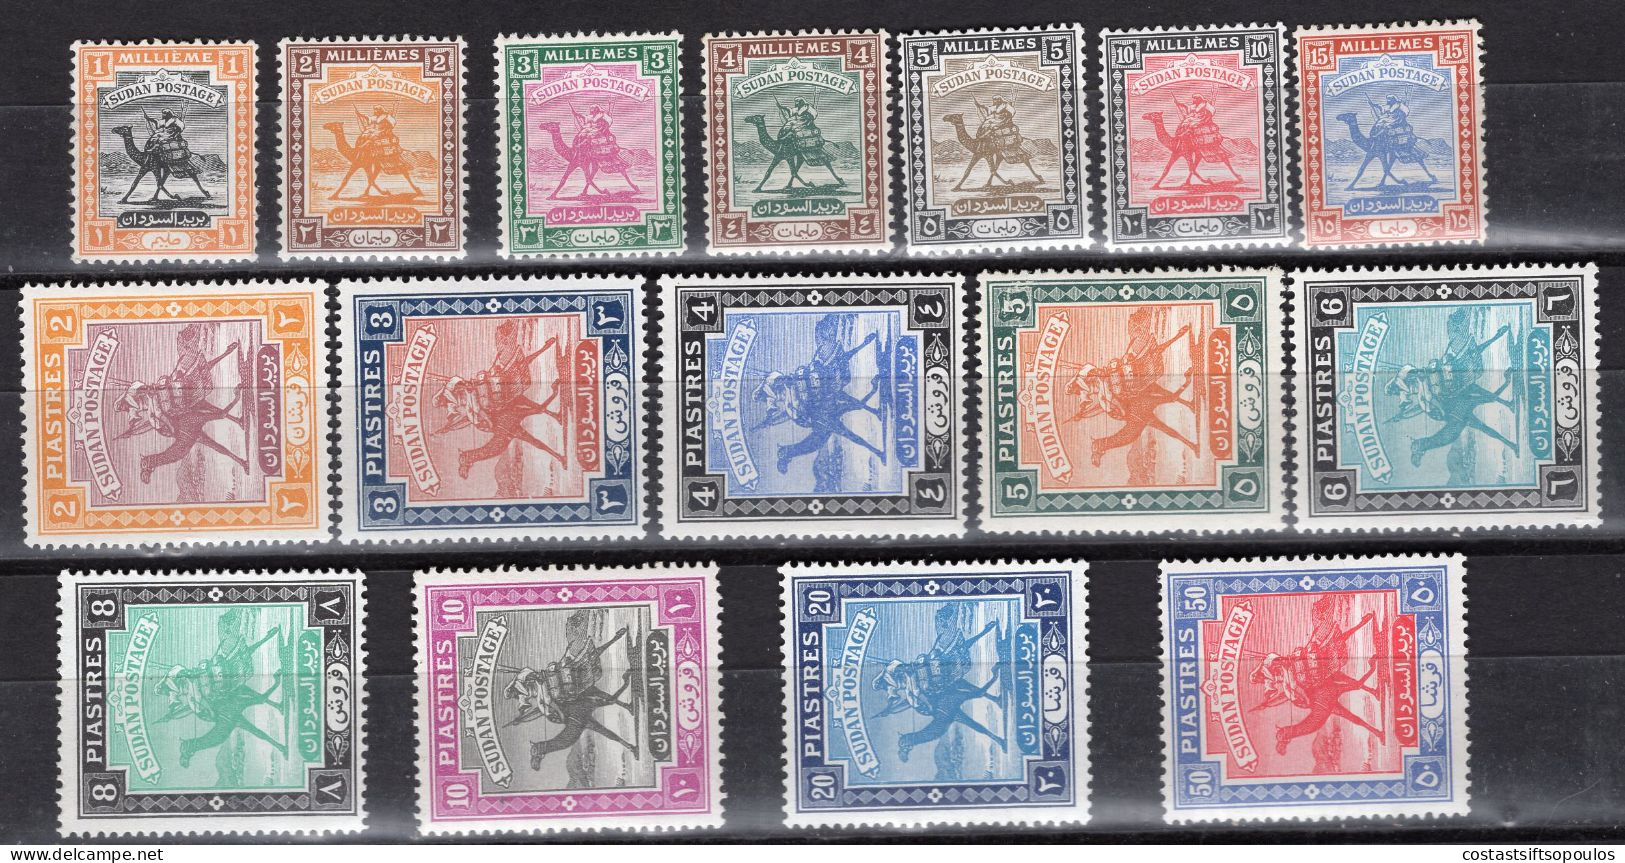 2265. SUDAN. 1948 SG. 96-111 MNH,CAMELPOSTMAN. - Sudan (...-1951)